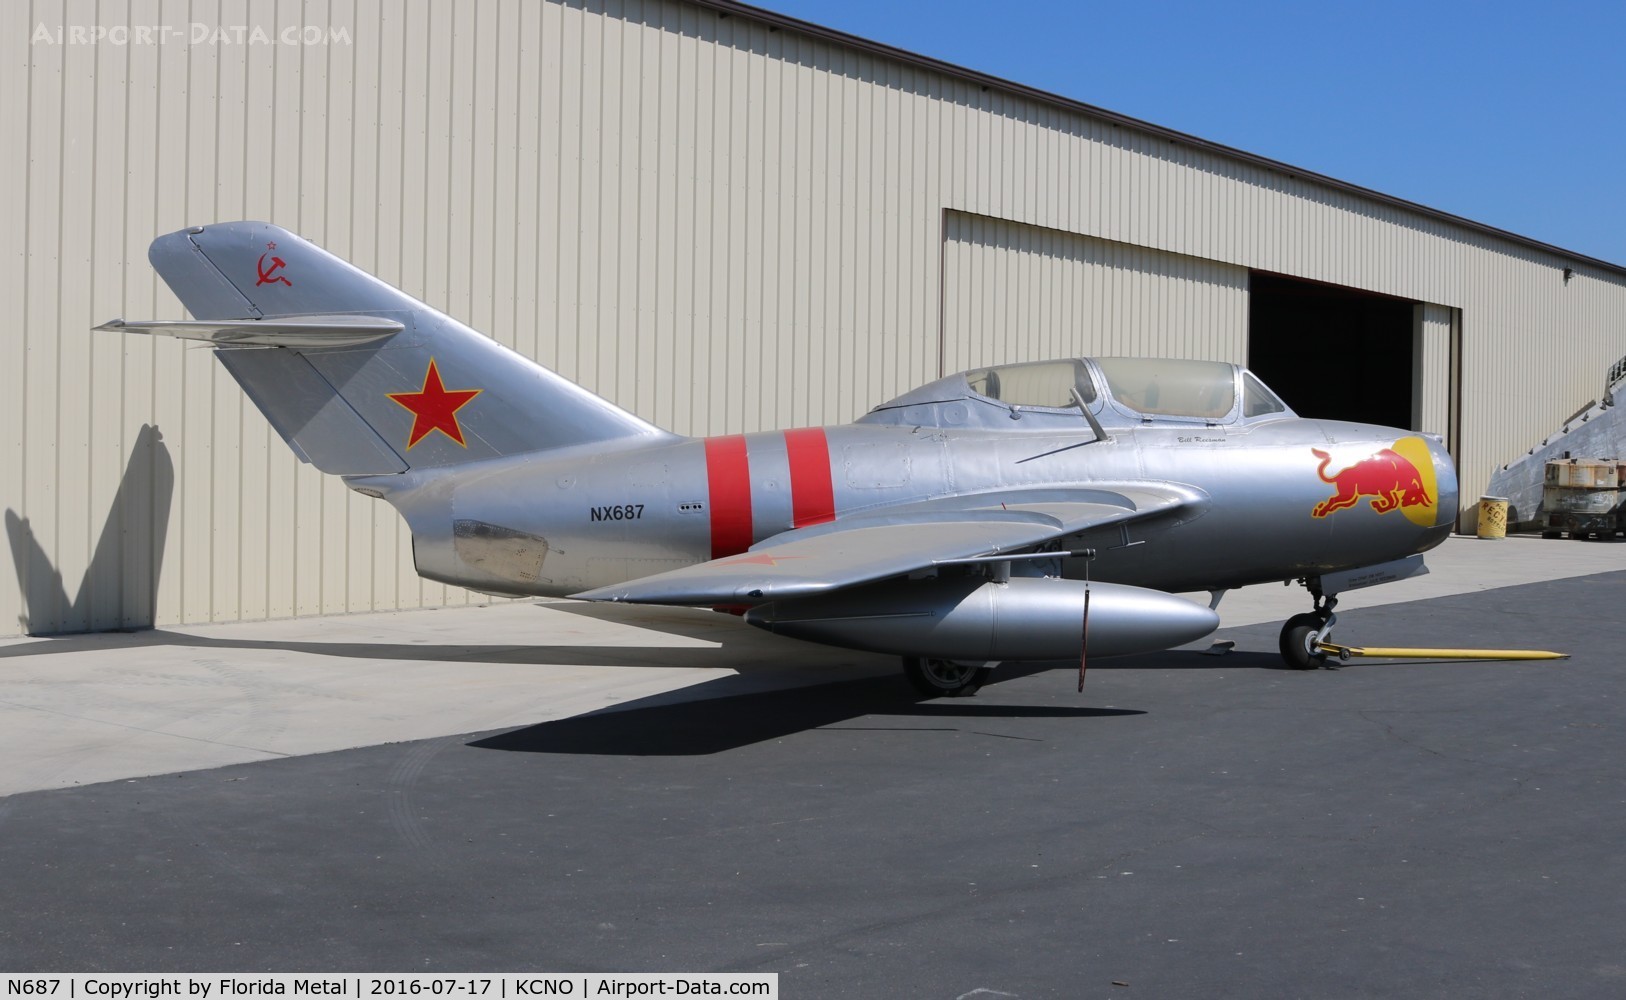 N687, 1953 Mikoyan-Gurevich MiG-15UTI C/N 1A02005, Planes of Fame